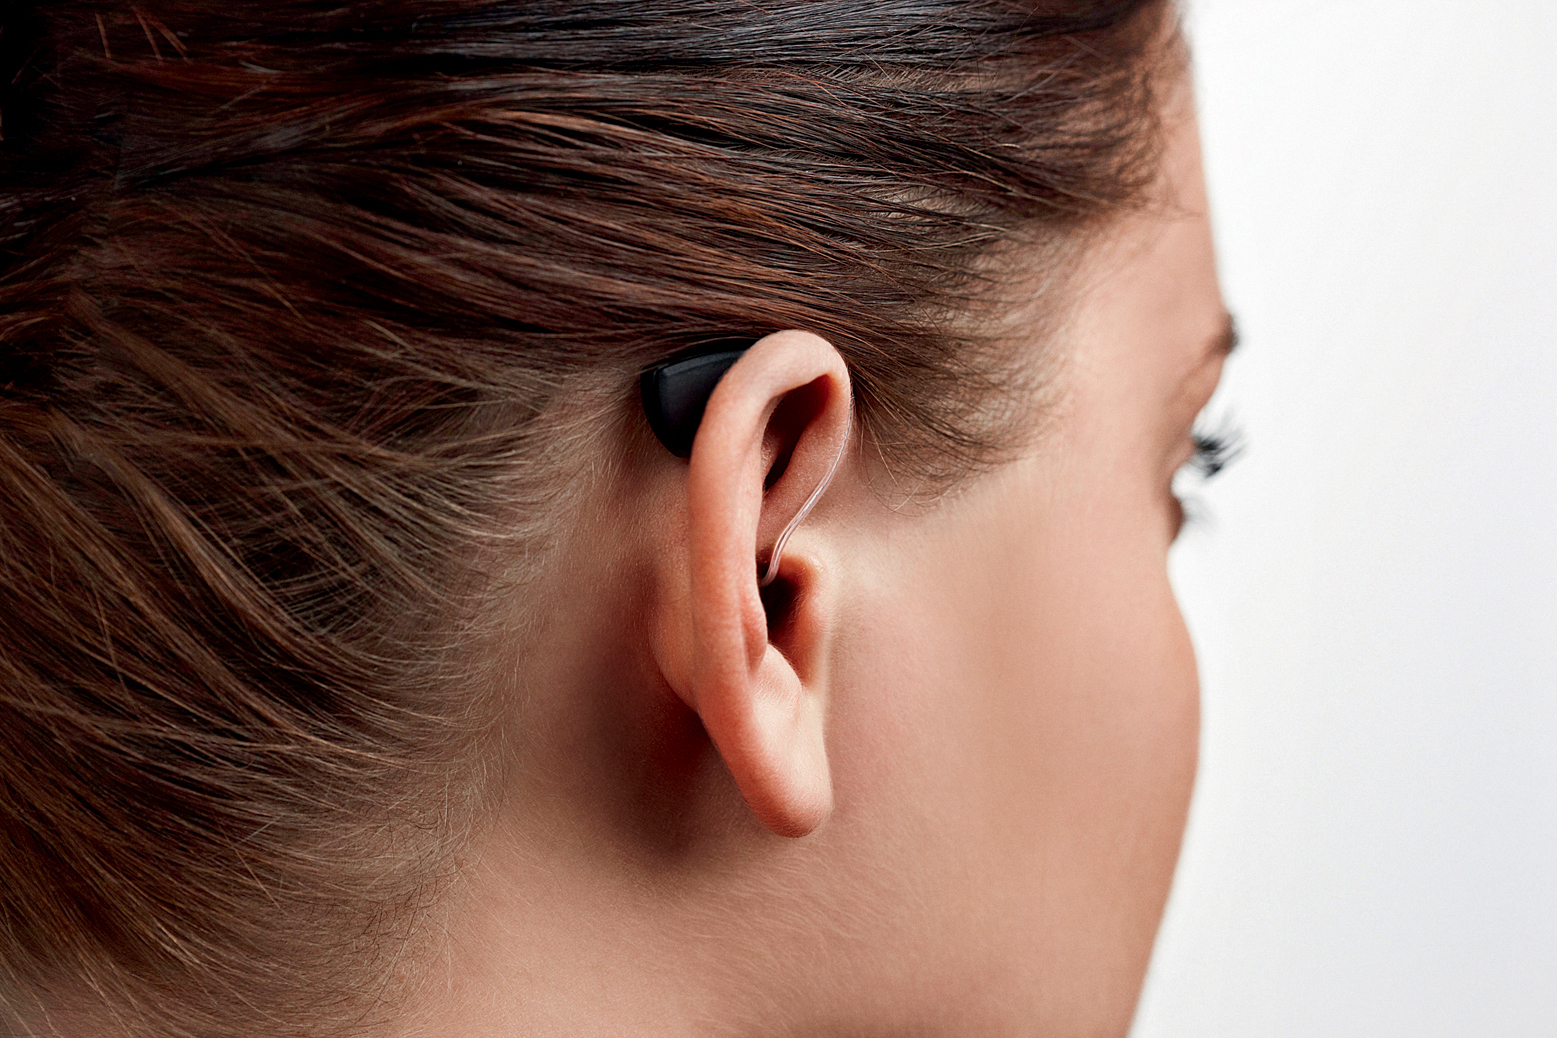 Ear hearing. Слуховой аппарат. Девушка со слуховым аппаратом. Слуховые аппараты в виде сережки.